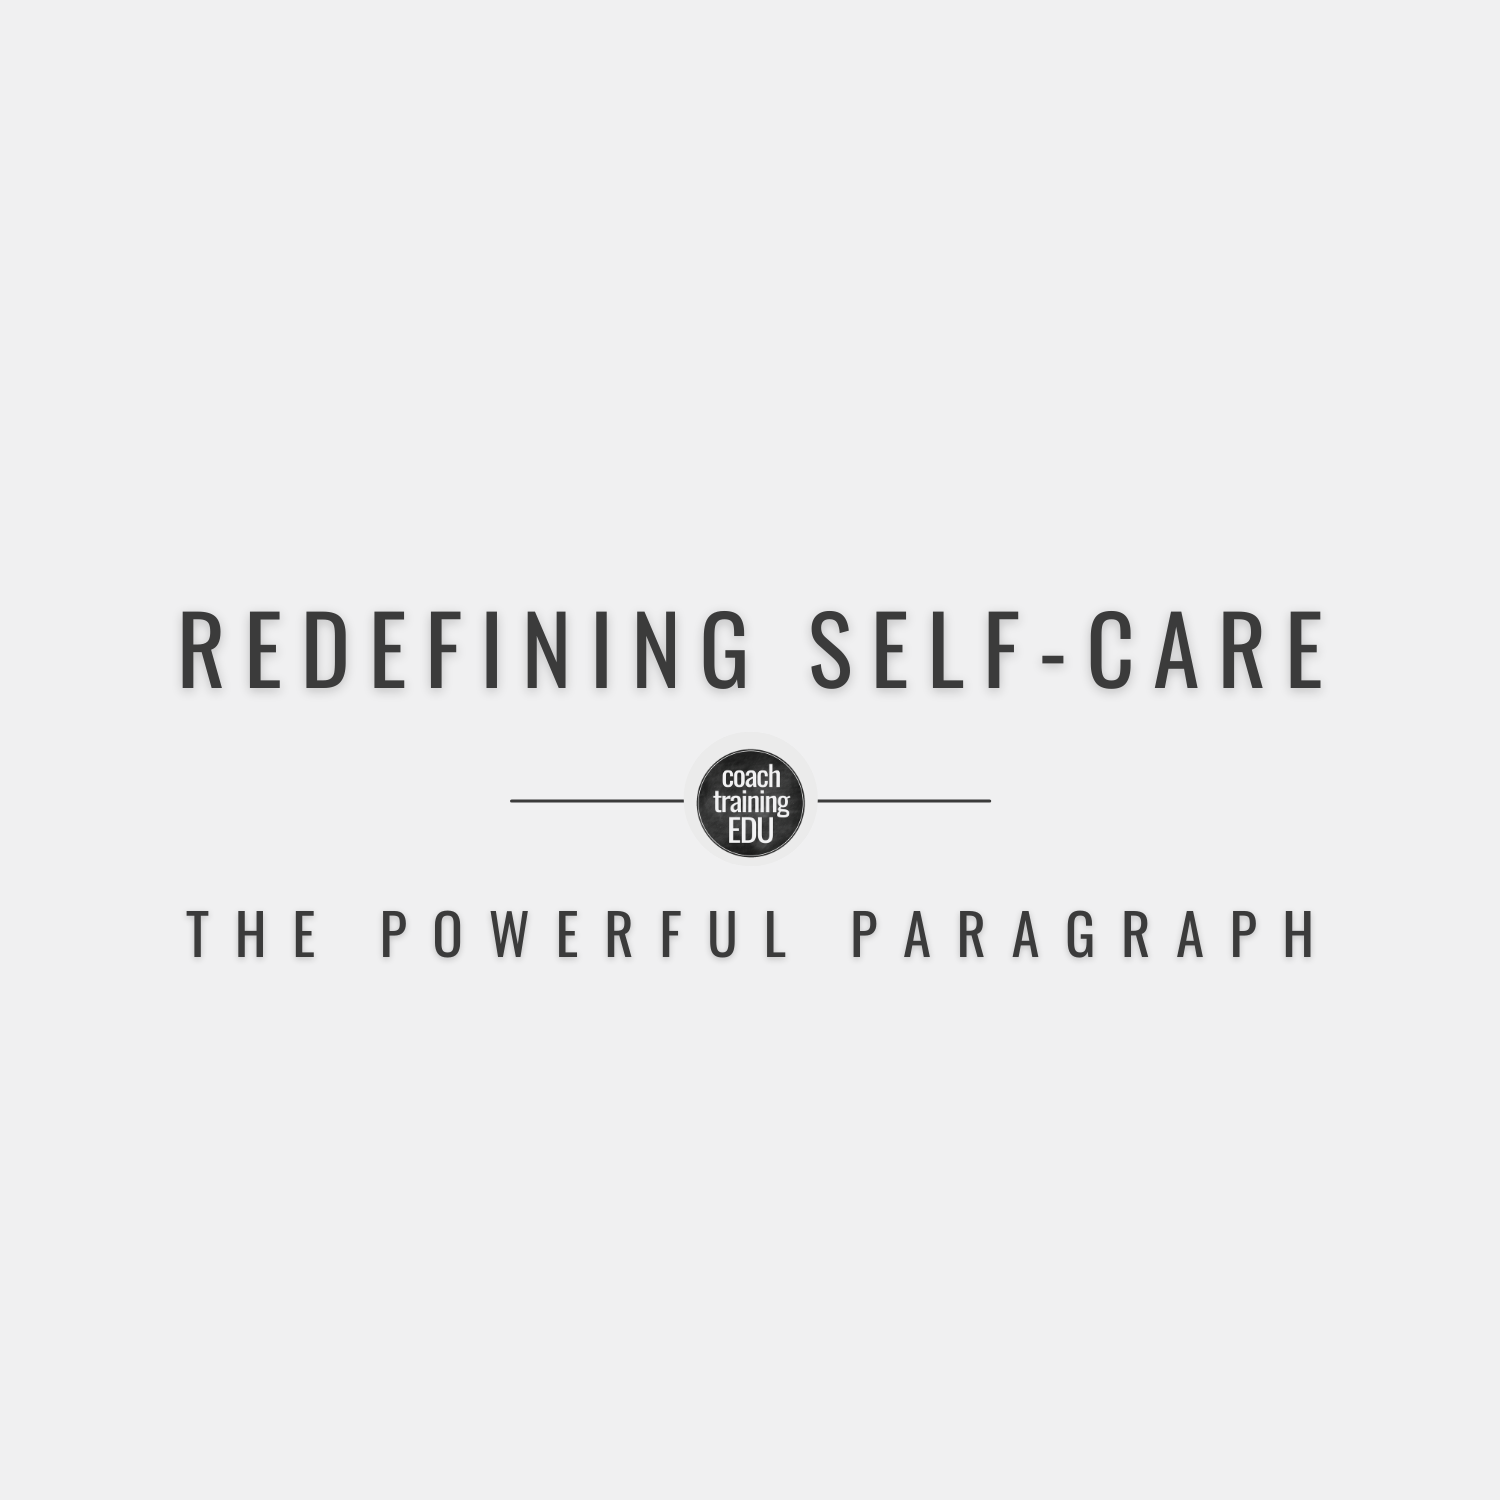 Redefining Self-Care